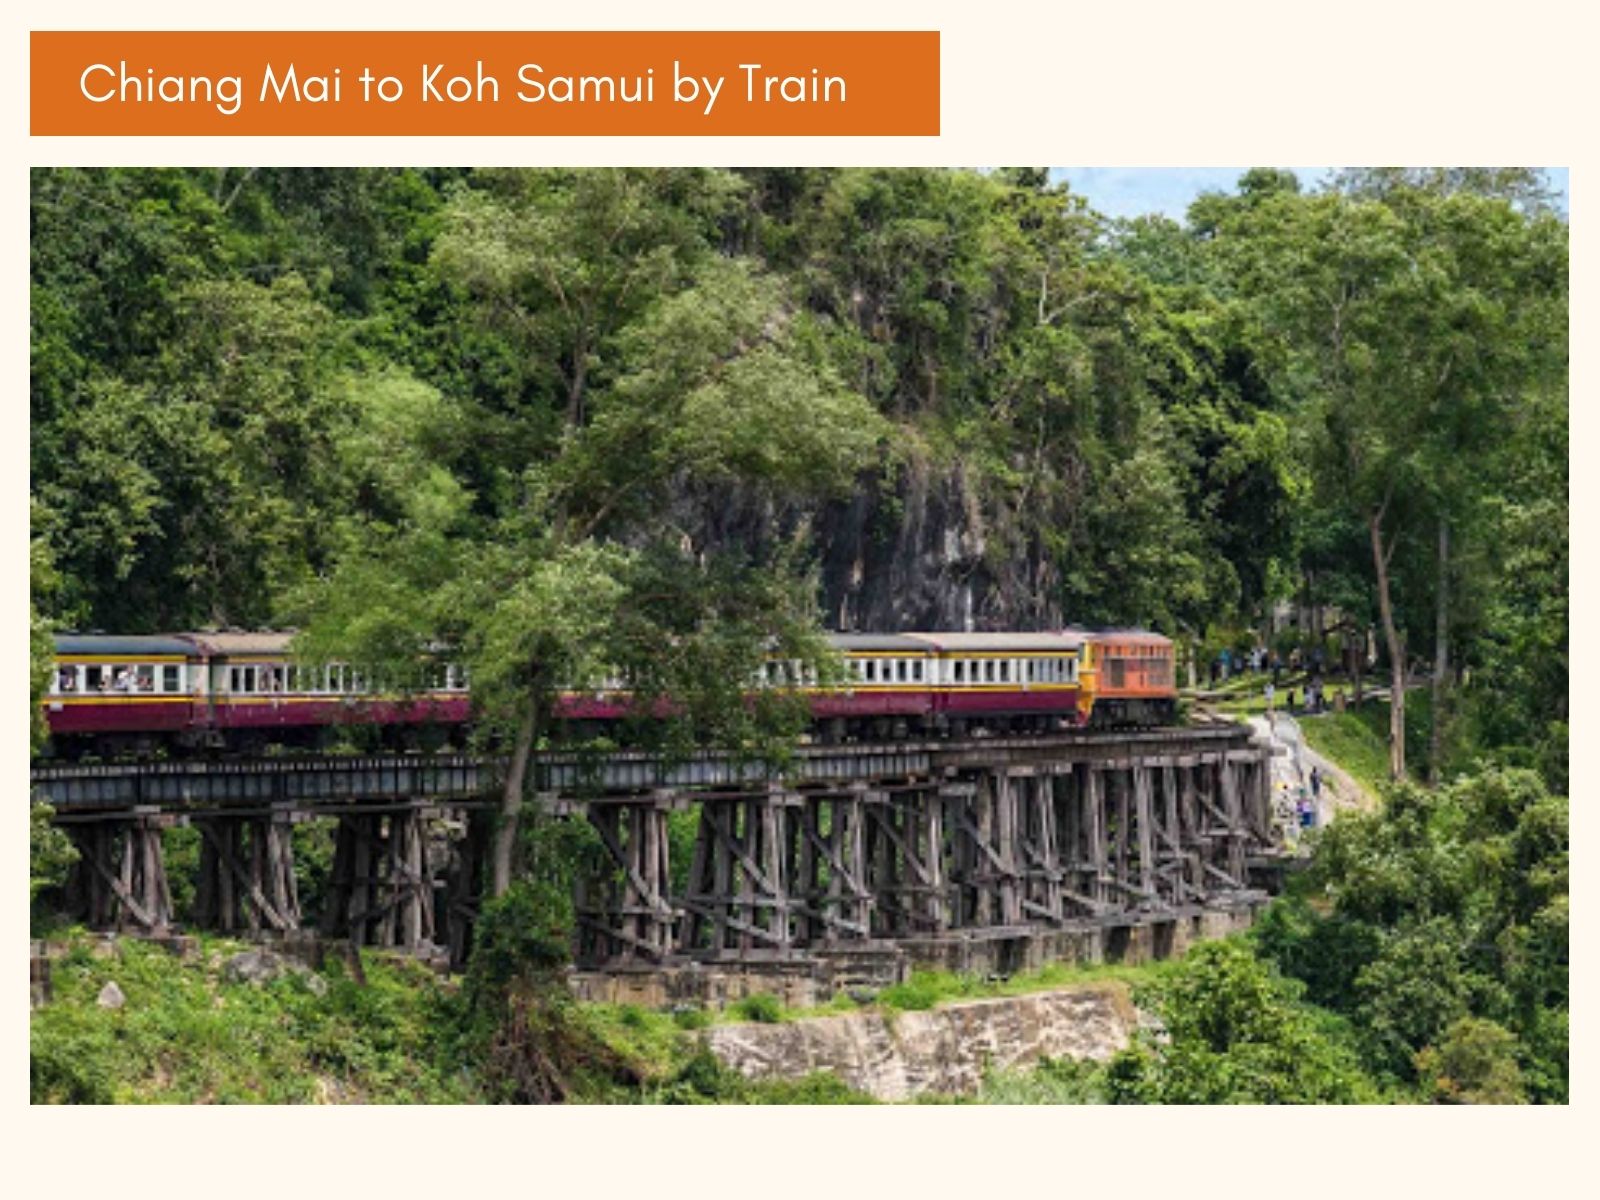 Chiang Mai to Bangkok train and connect to Koh Samui